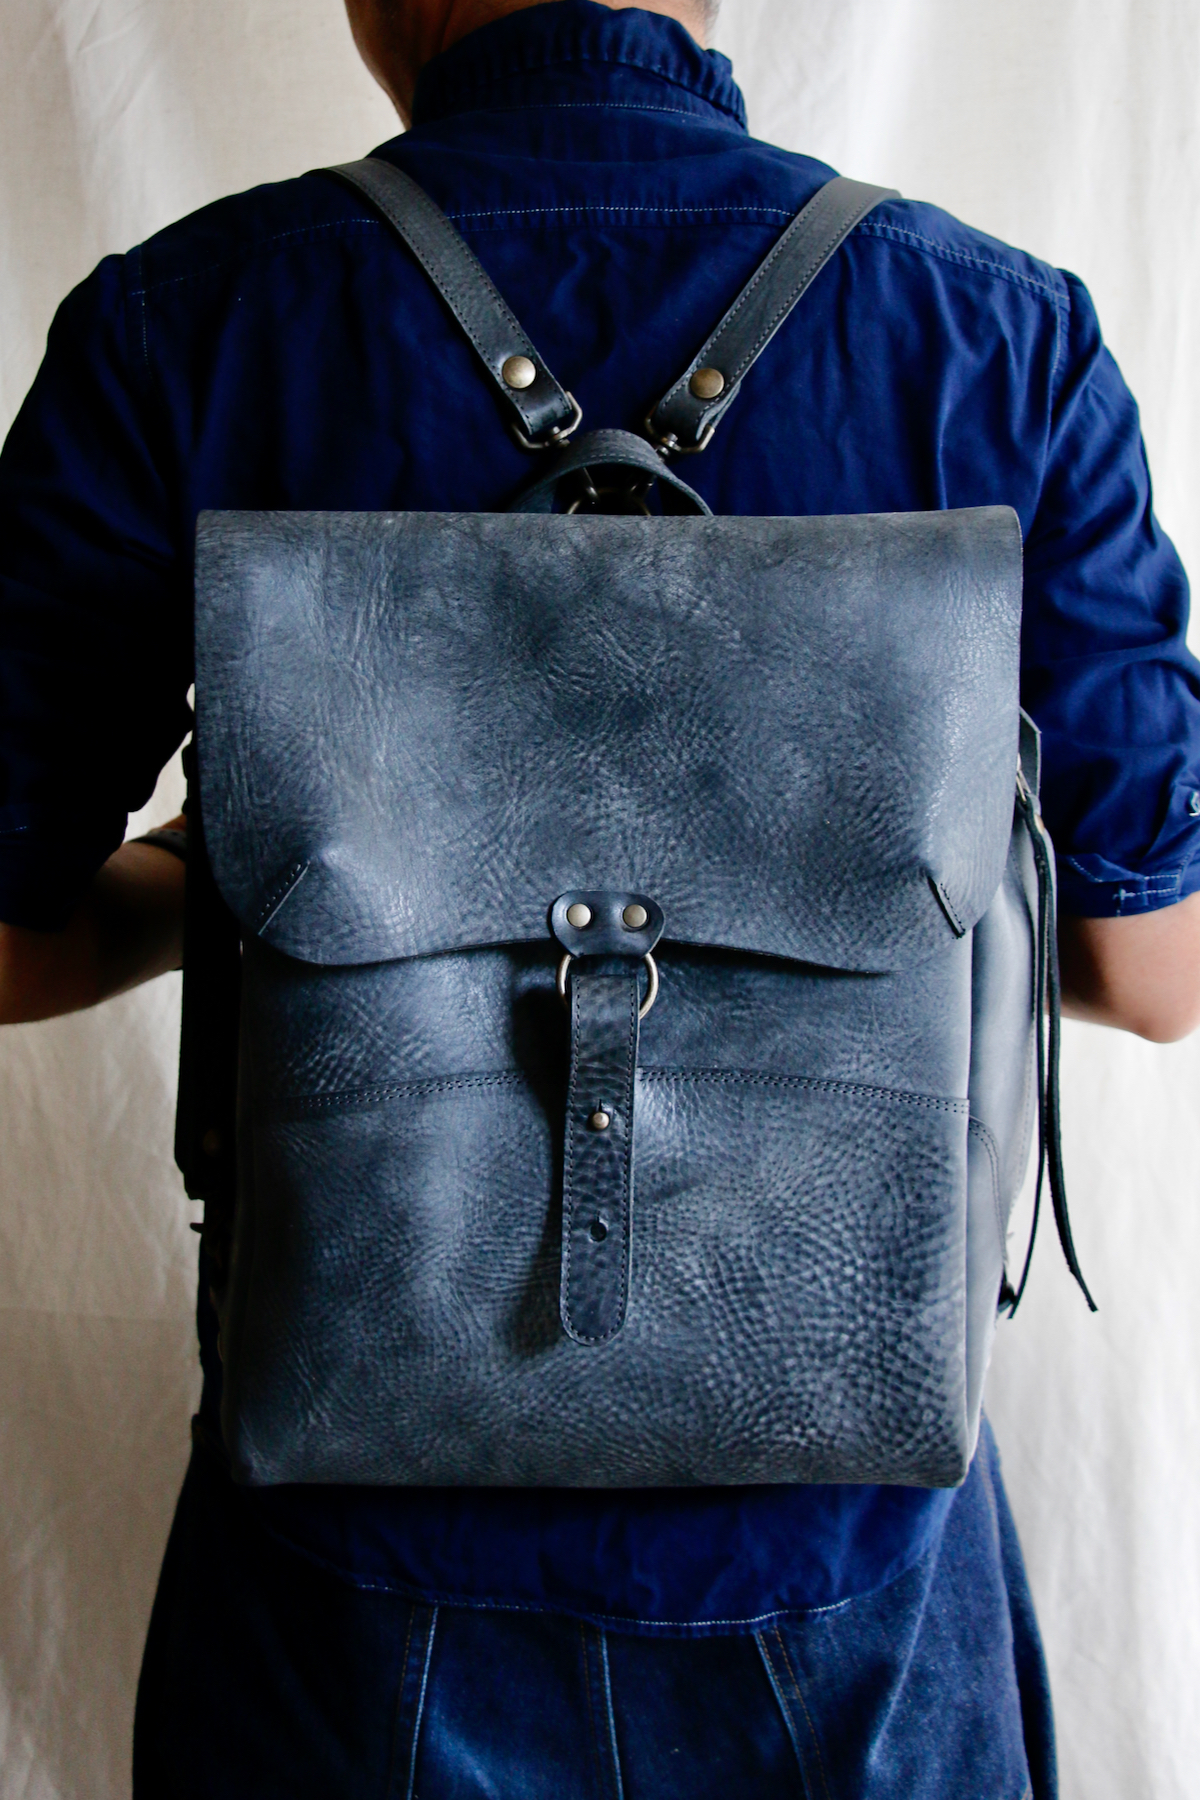 kokochi sun3 / 365 Leather Back Pack